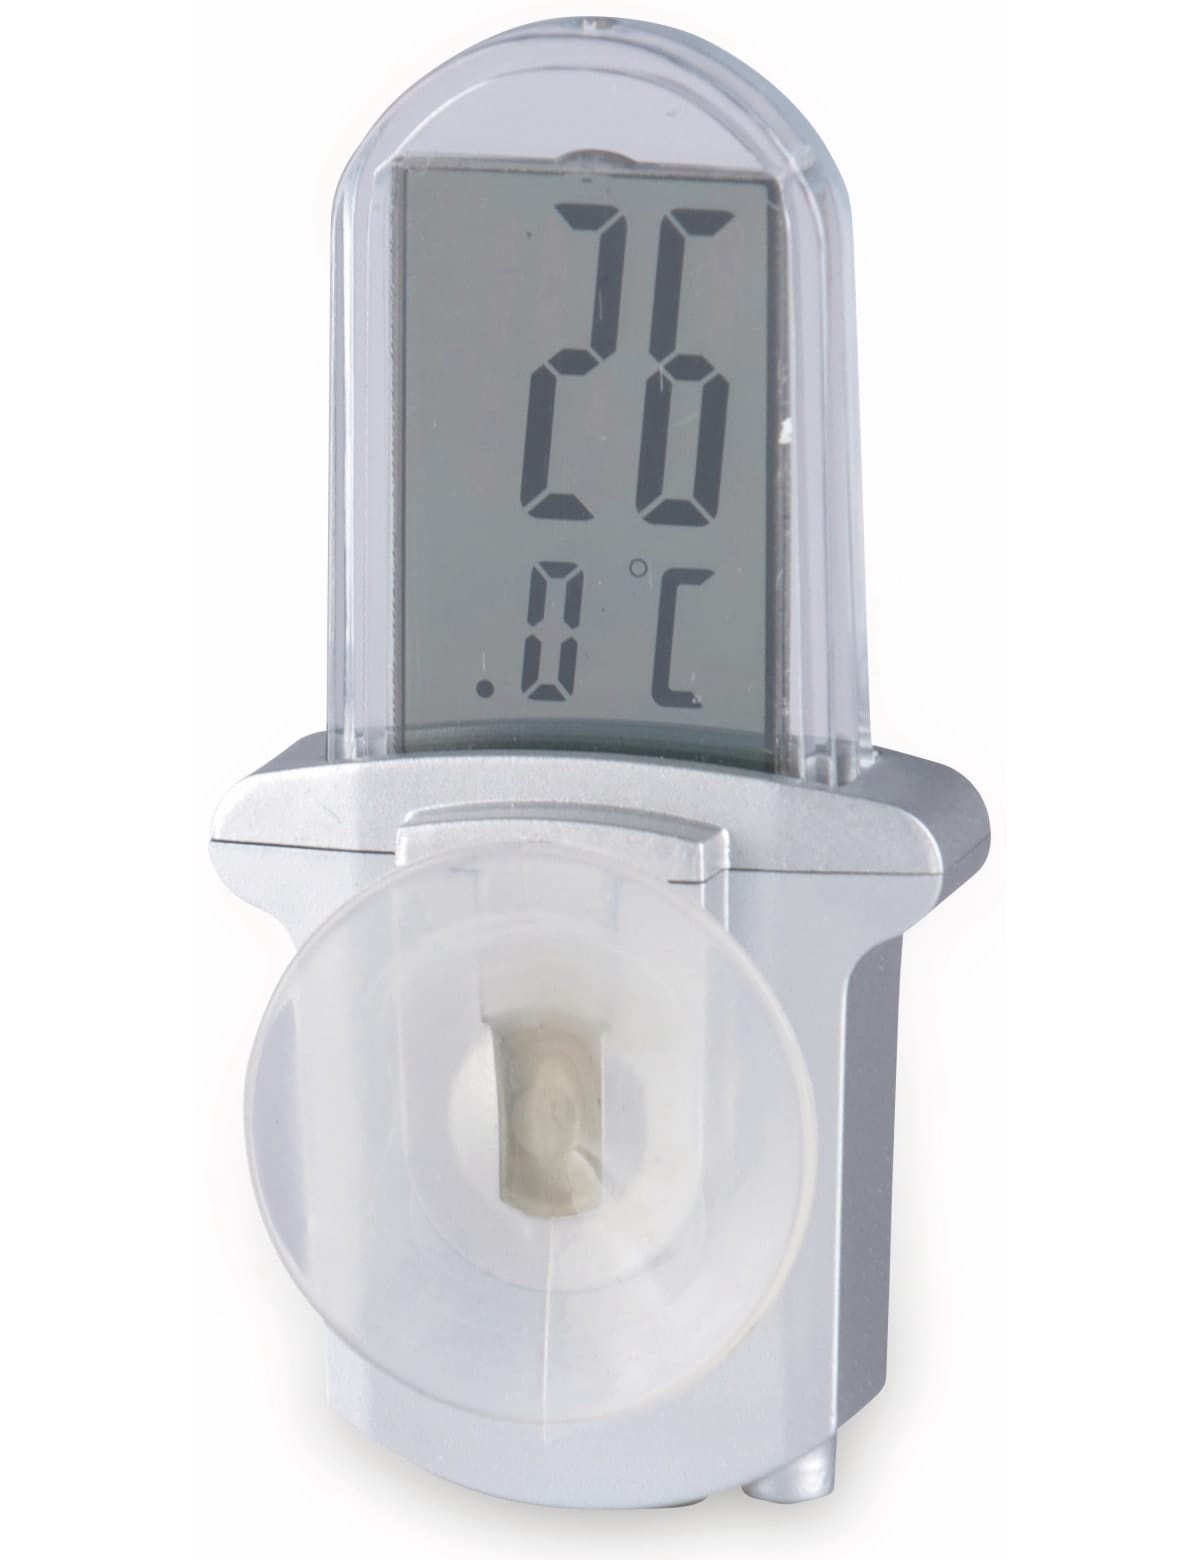 GRUNDIG Thermometer, mit Saugnapf, -20 °C bis +50 °C